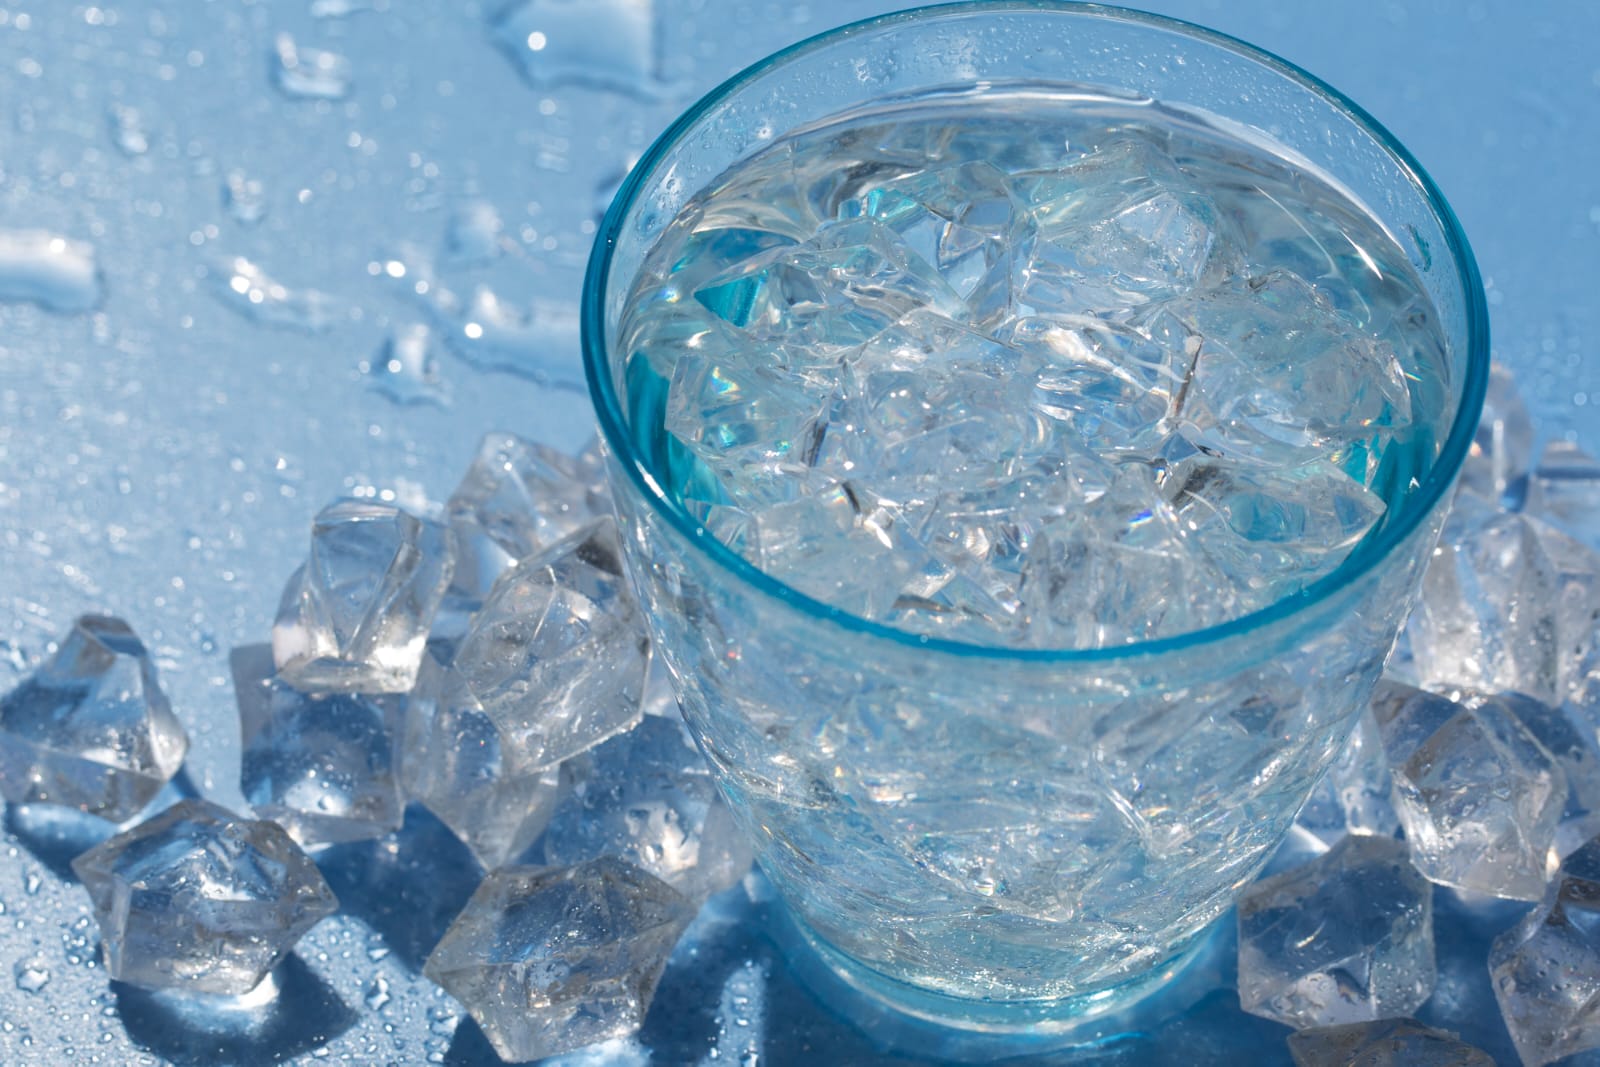 Mengungkap Bahaya Minum Air Es Berlebihan: Ancaman Tersembunyi bagi Kesehatan